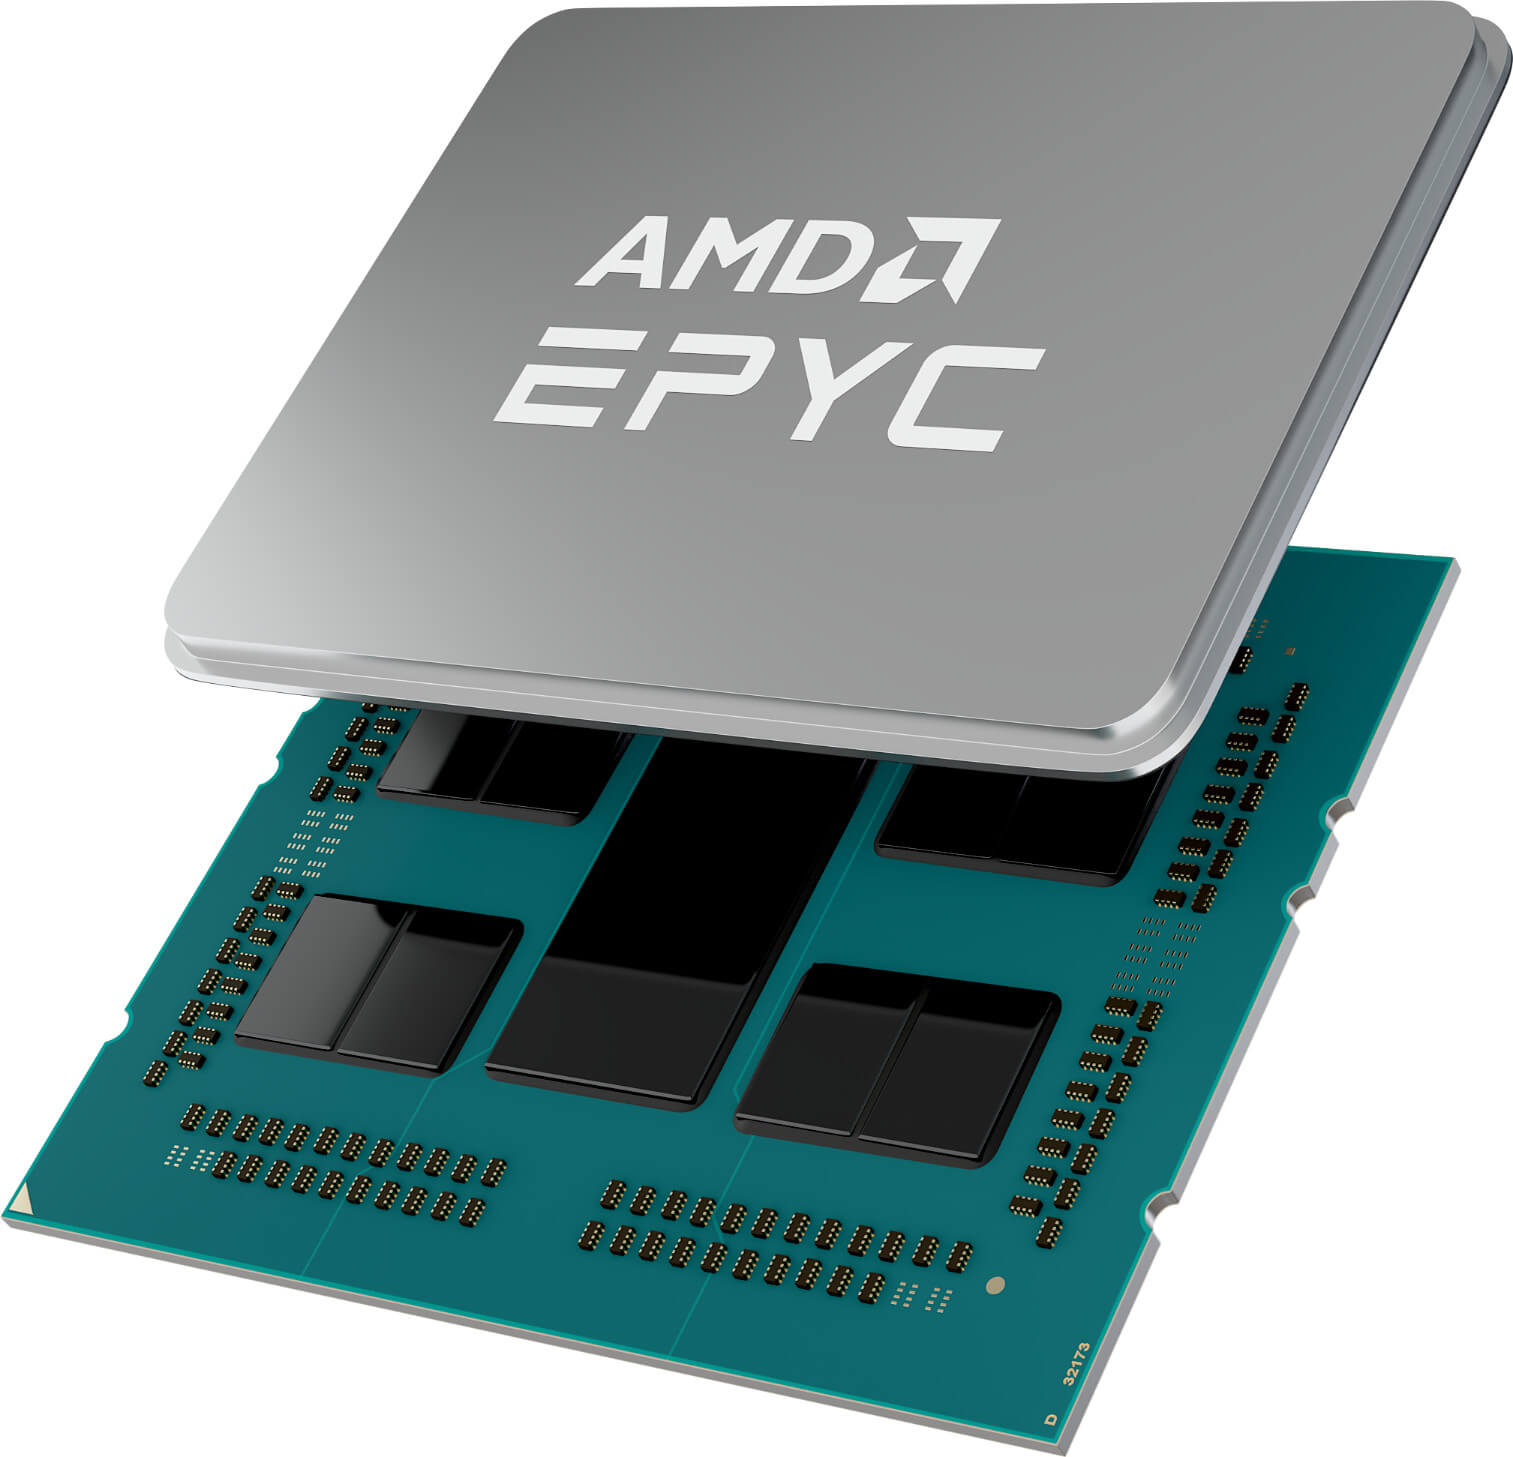 1622479871 507 Segun se informa AMD reserva una capacidad de 5 nm